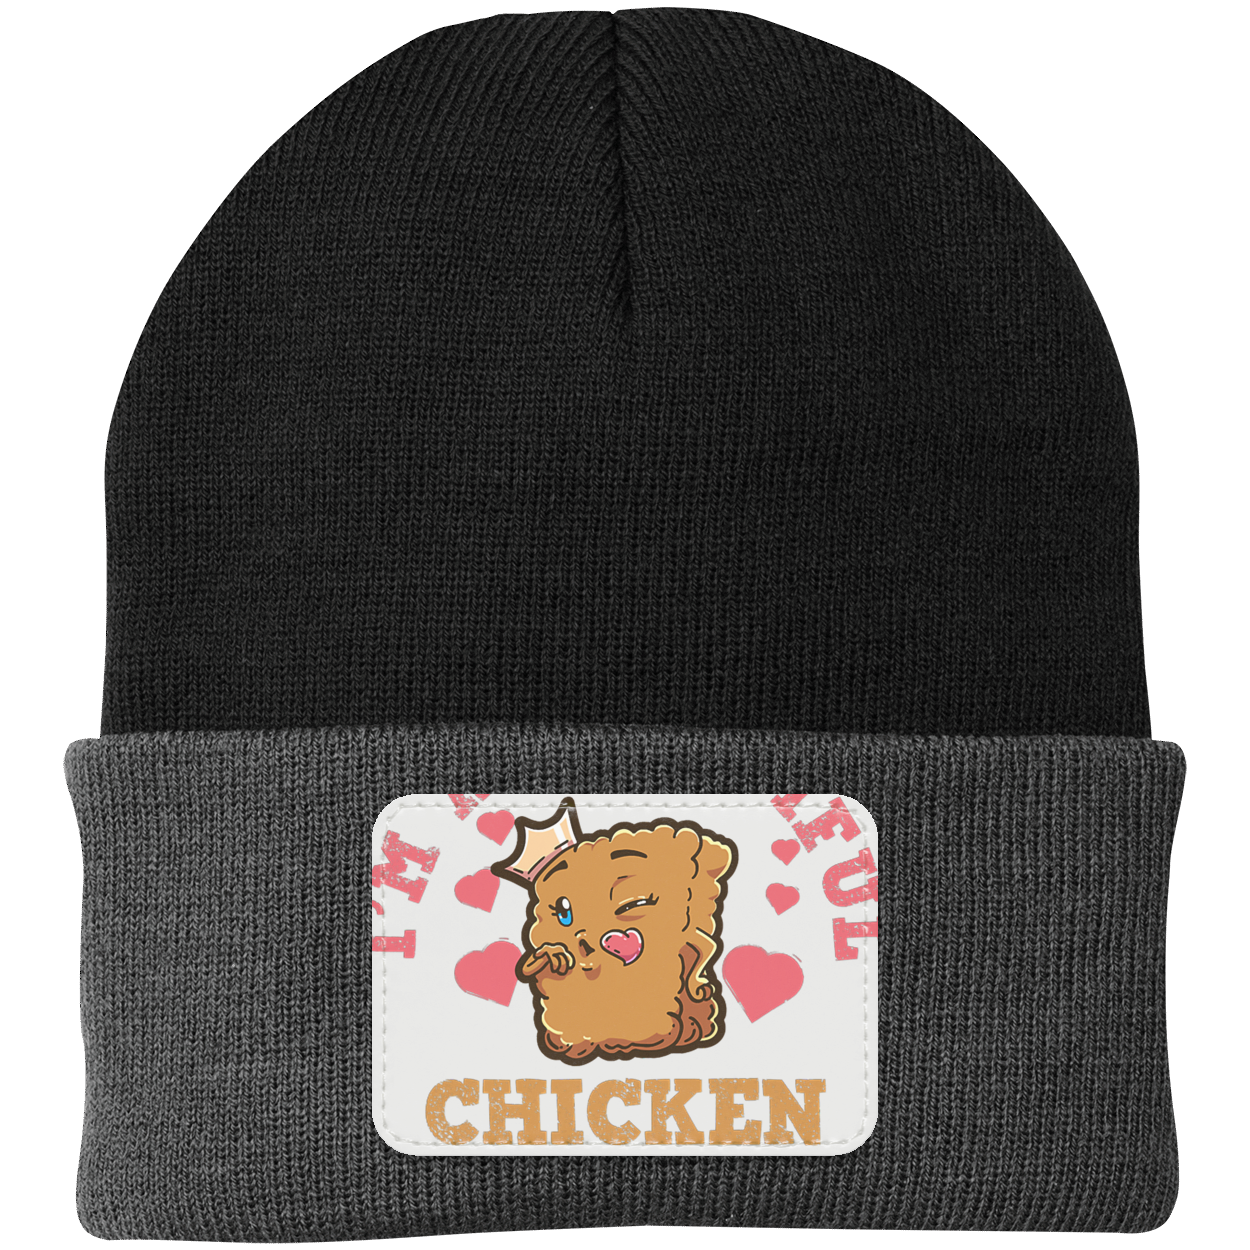 Chicken Nuggets Knit Cap